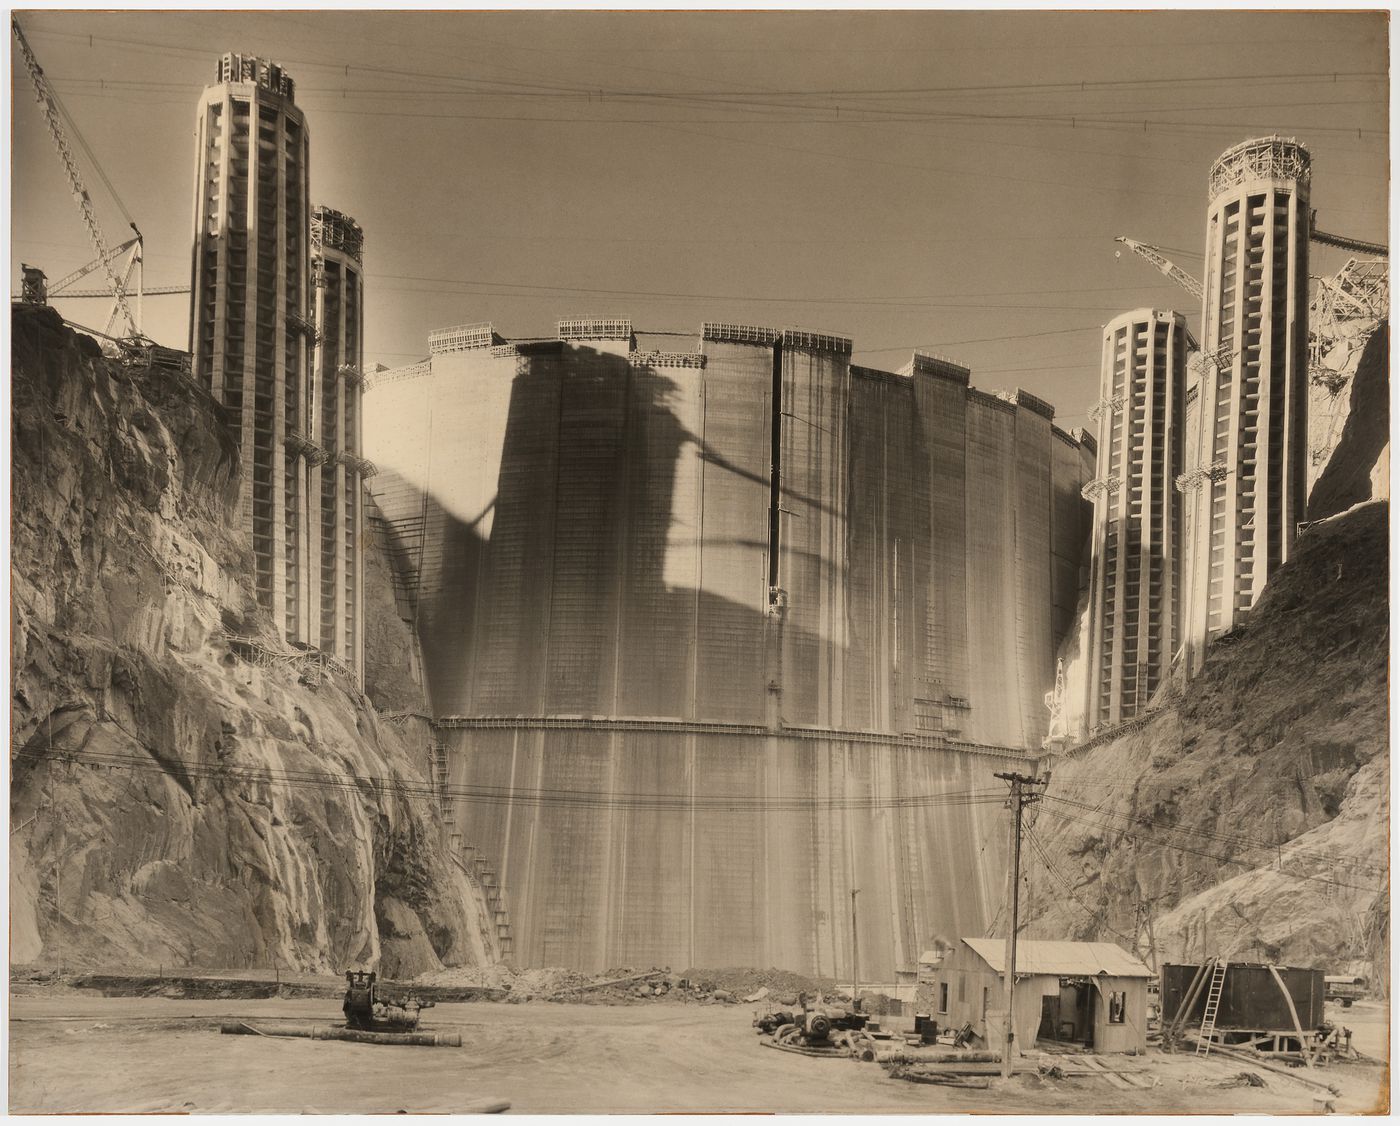 Construction of the Hoover Dam, Arizona-Nevada border